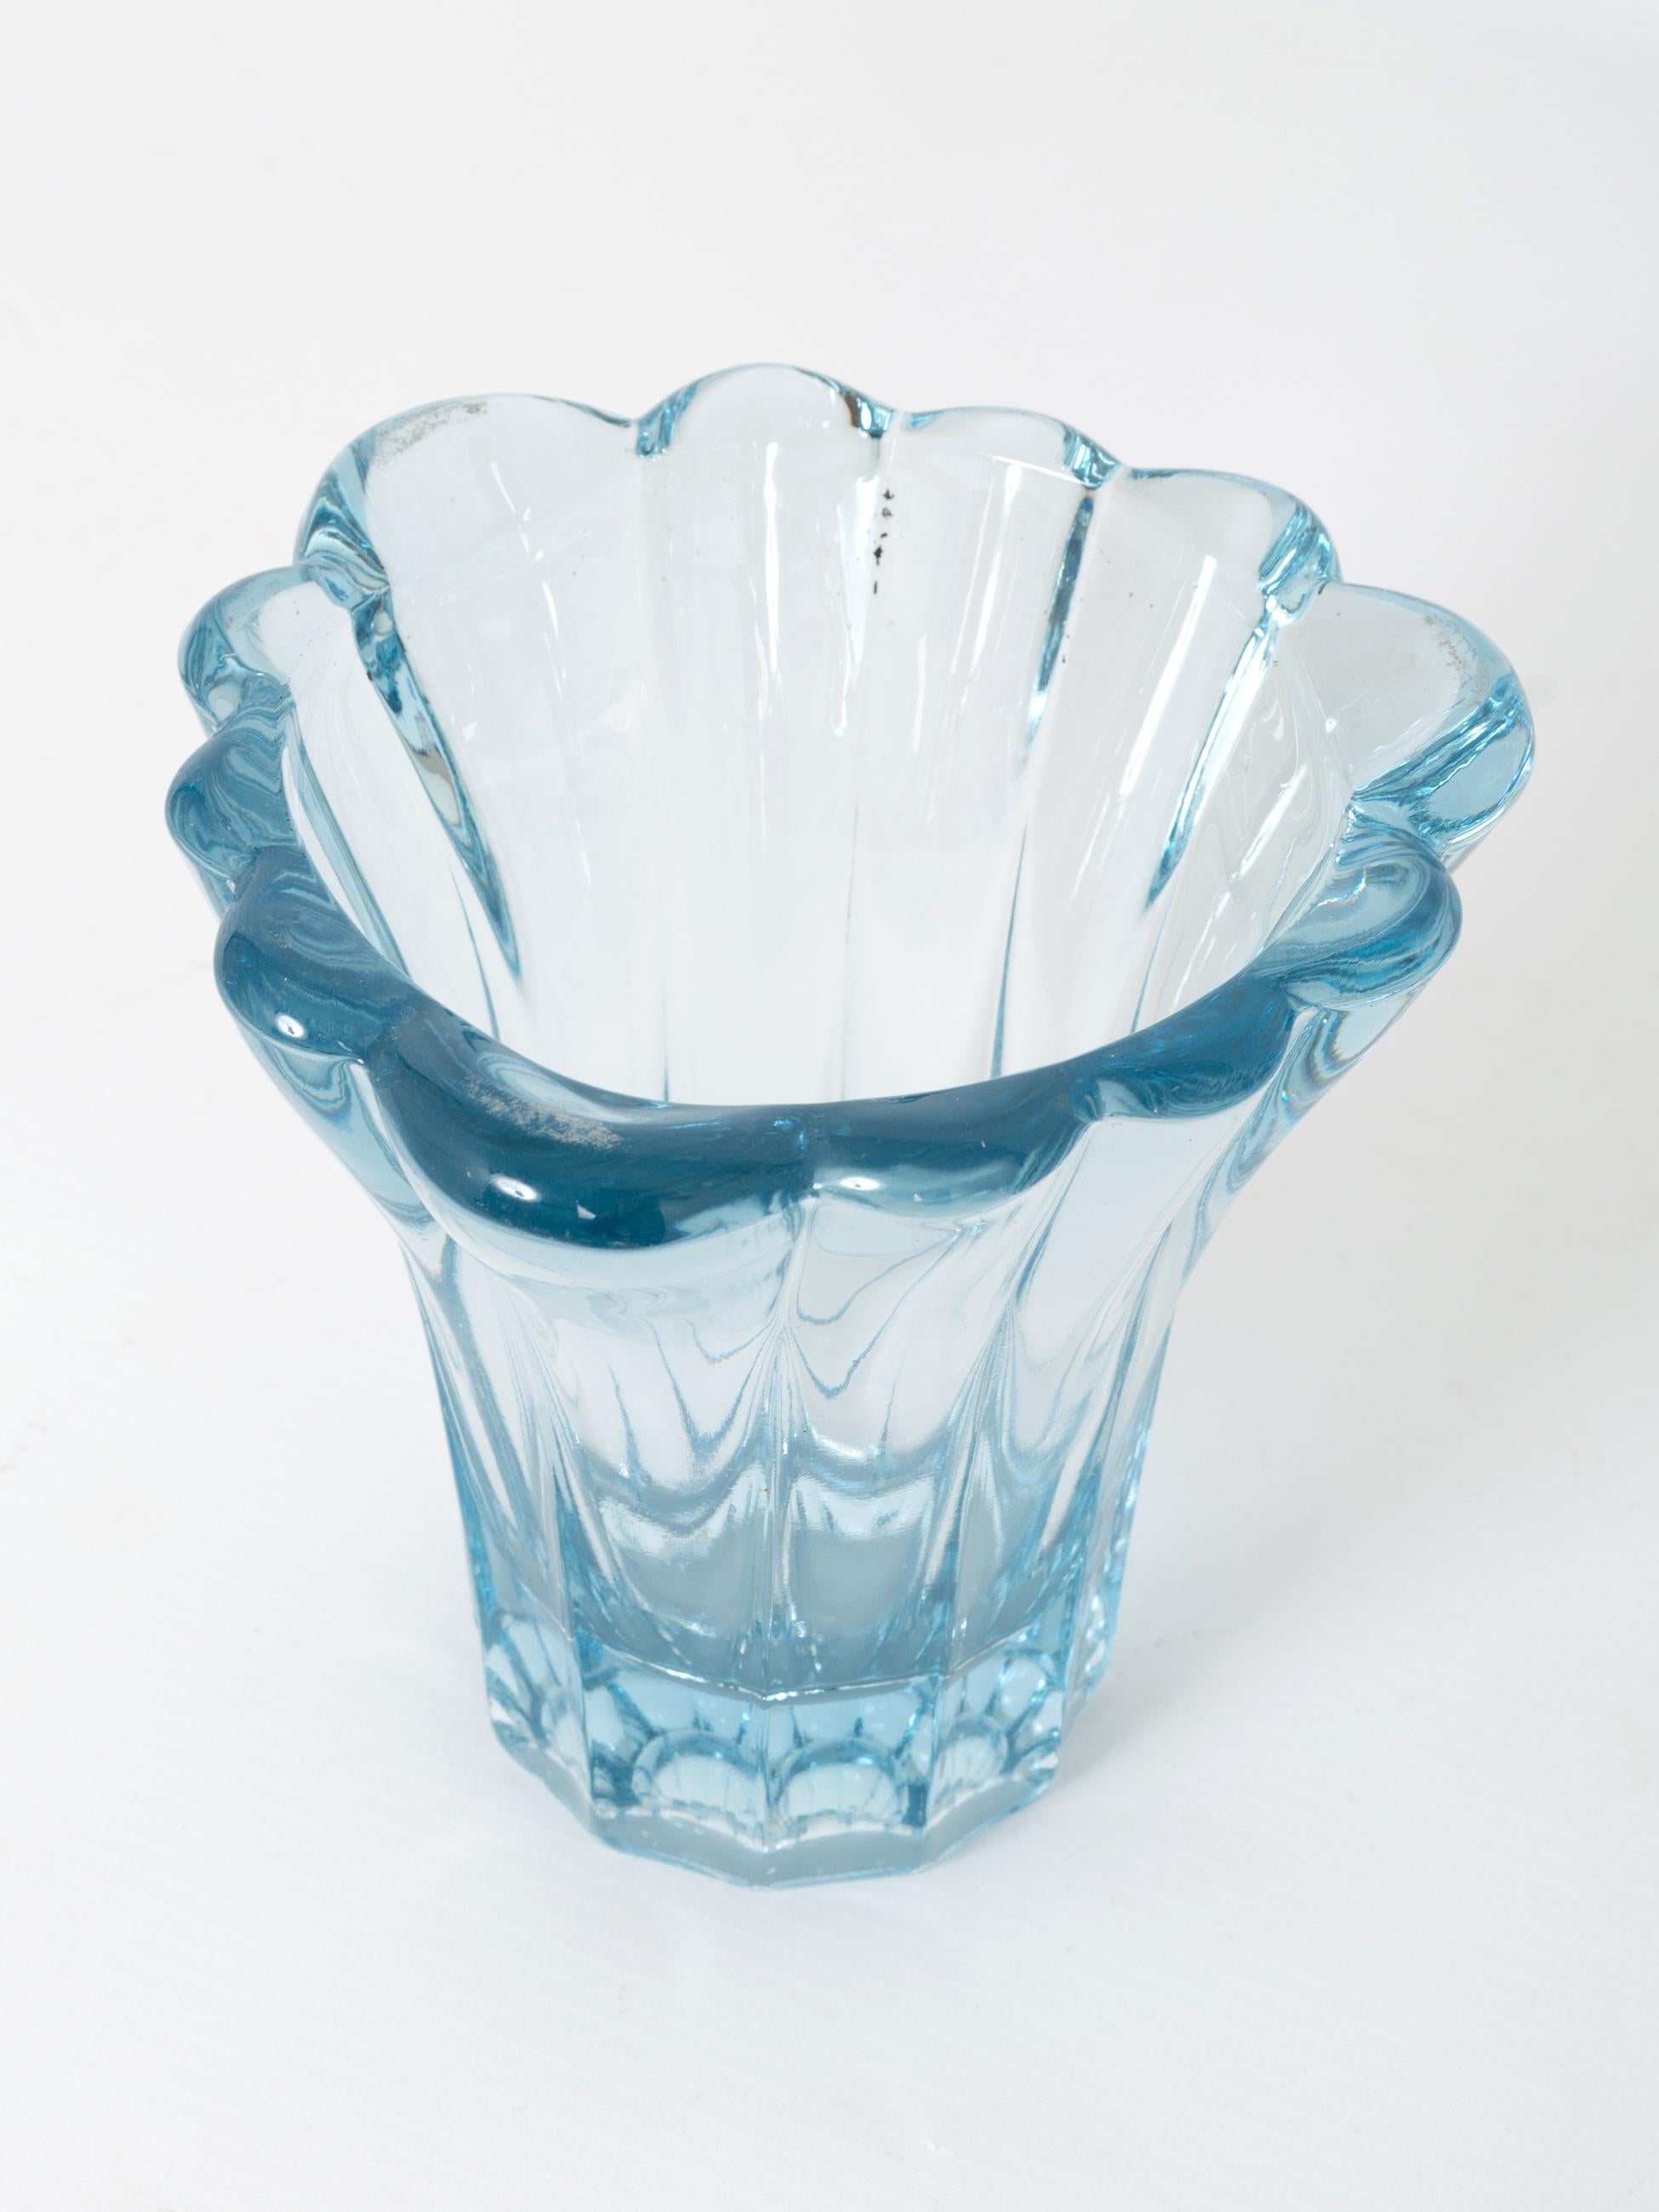 Mid century scalloped aqua blue glass vase. France, C.1950.
In excellent vintage condition, minor scuffs to rim.